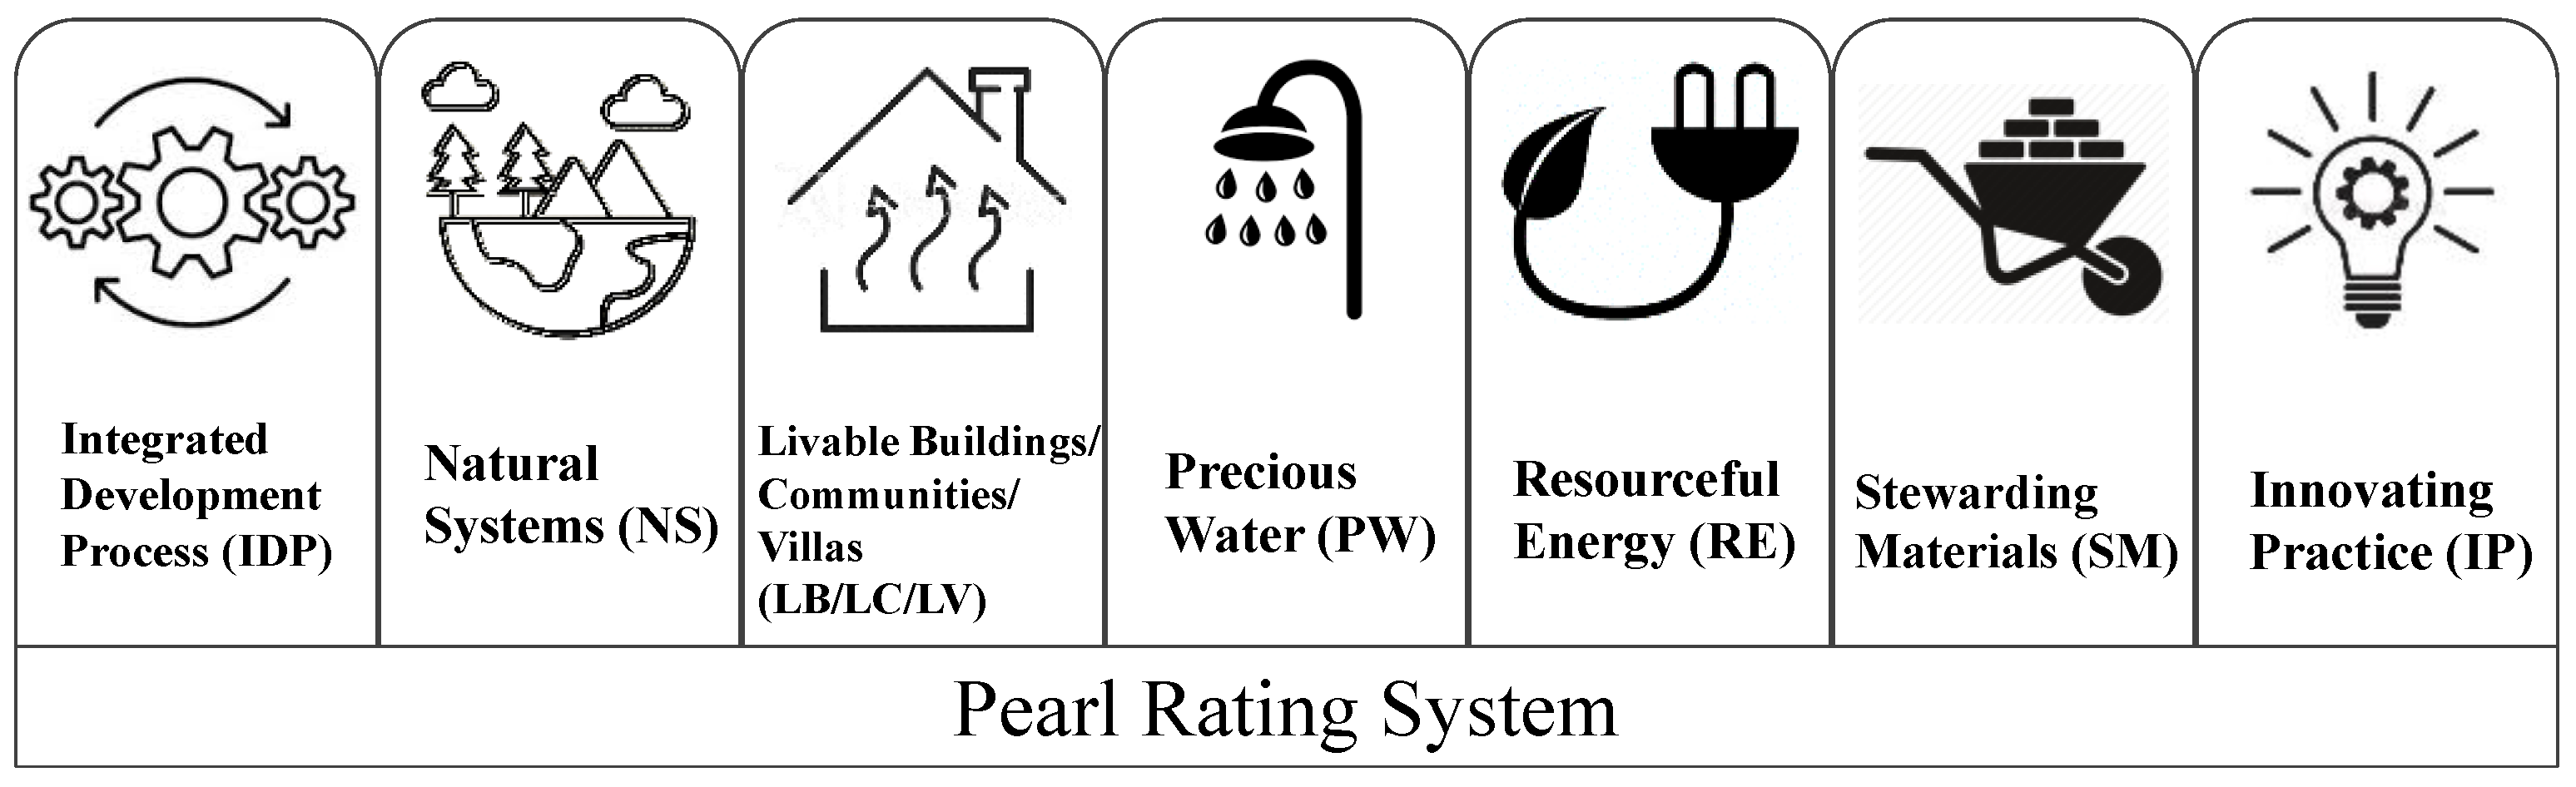 estidama pearl rating system pdf